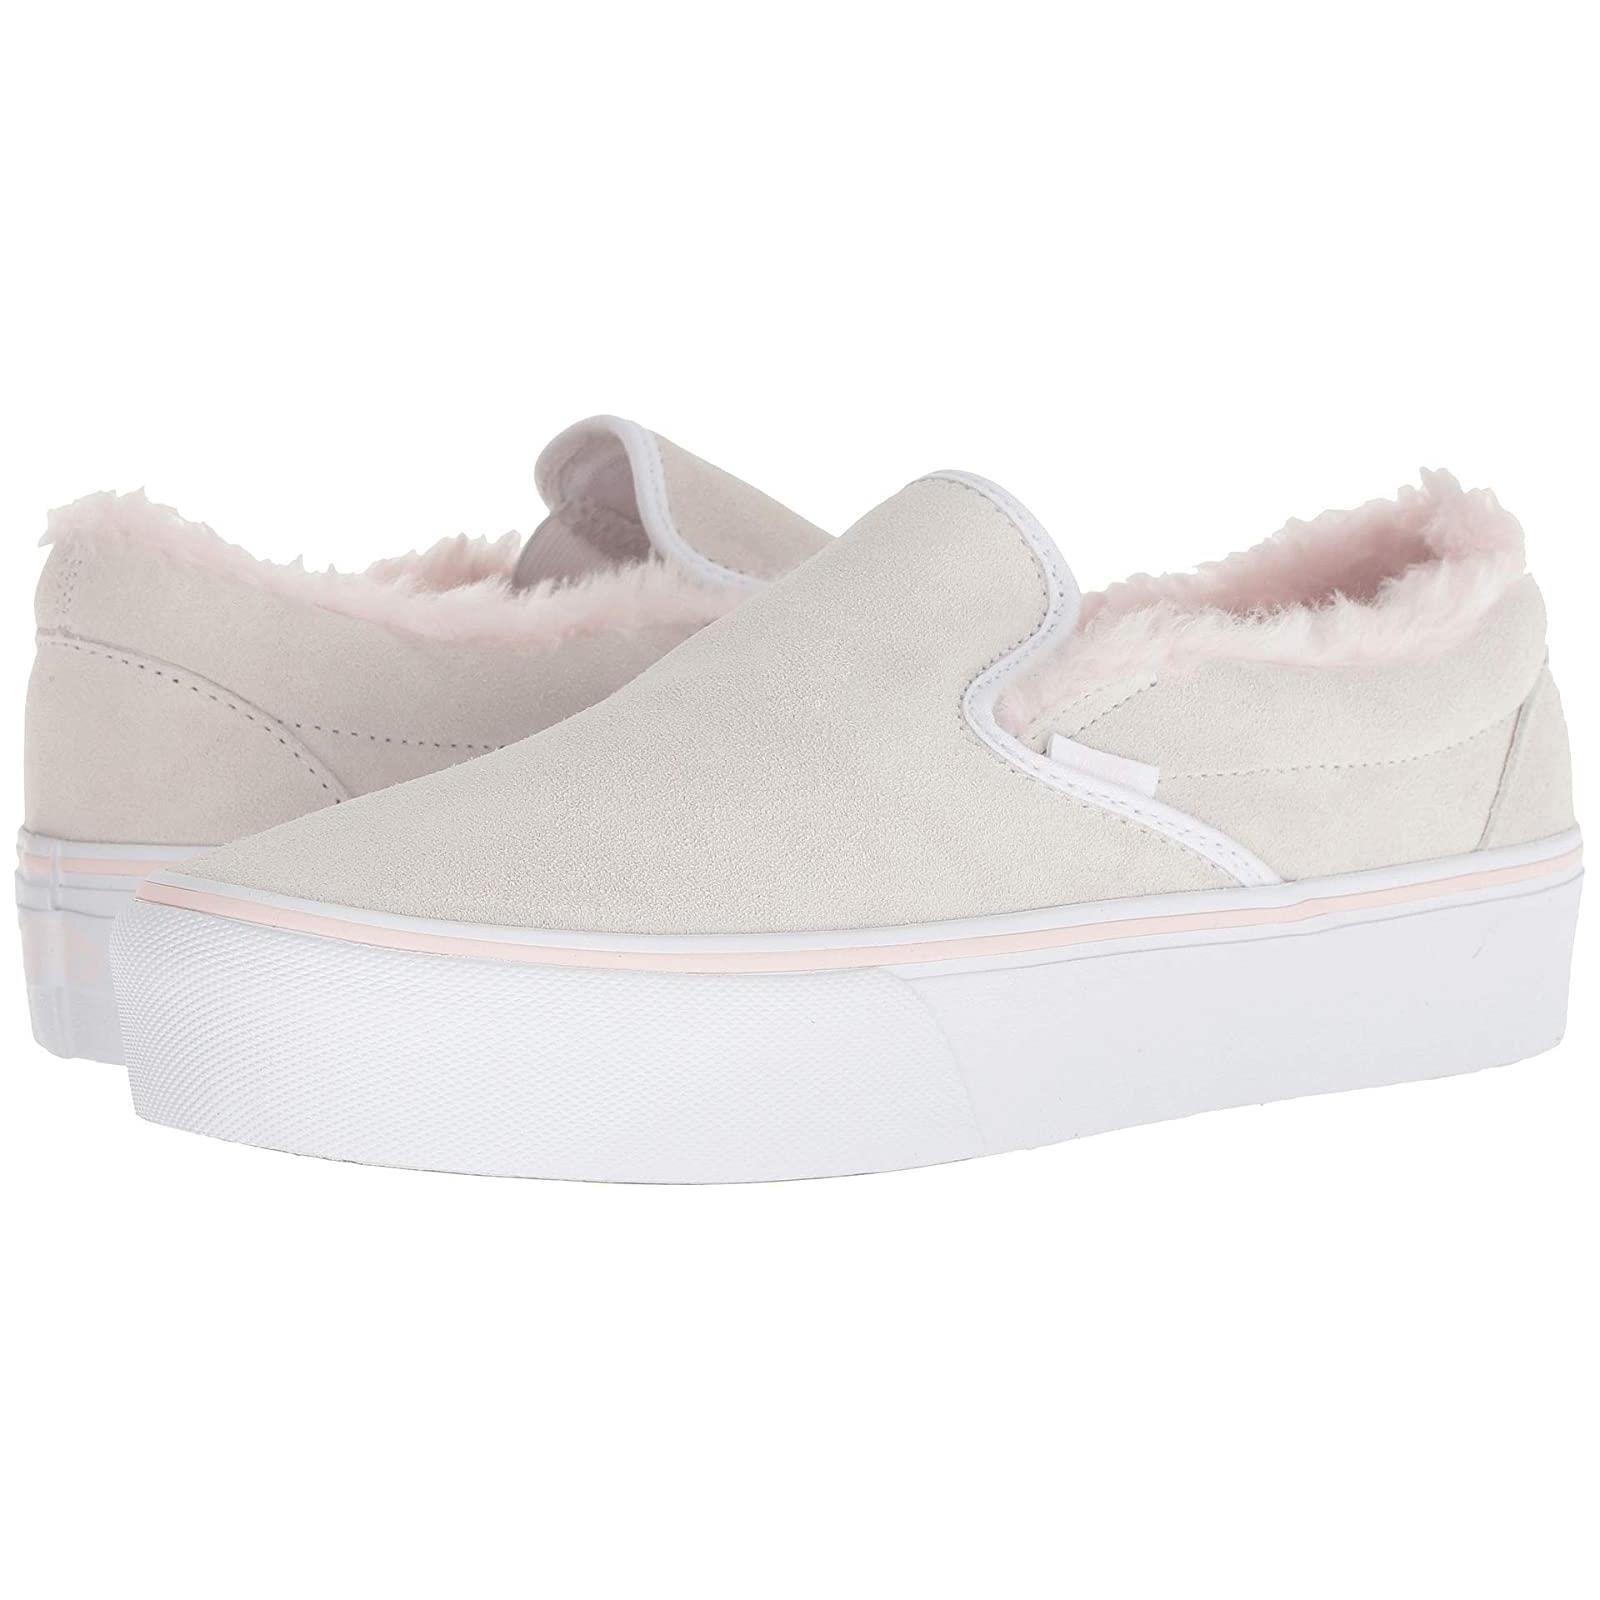 Adult Unisex Sneakers Athletic Shoes Vans Classic Slip-on Platform (Suede/Fur) True White/Pink